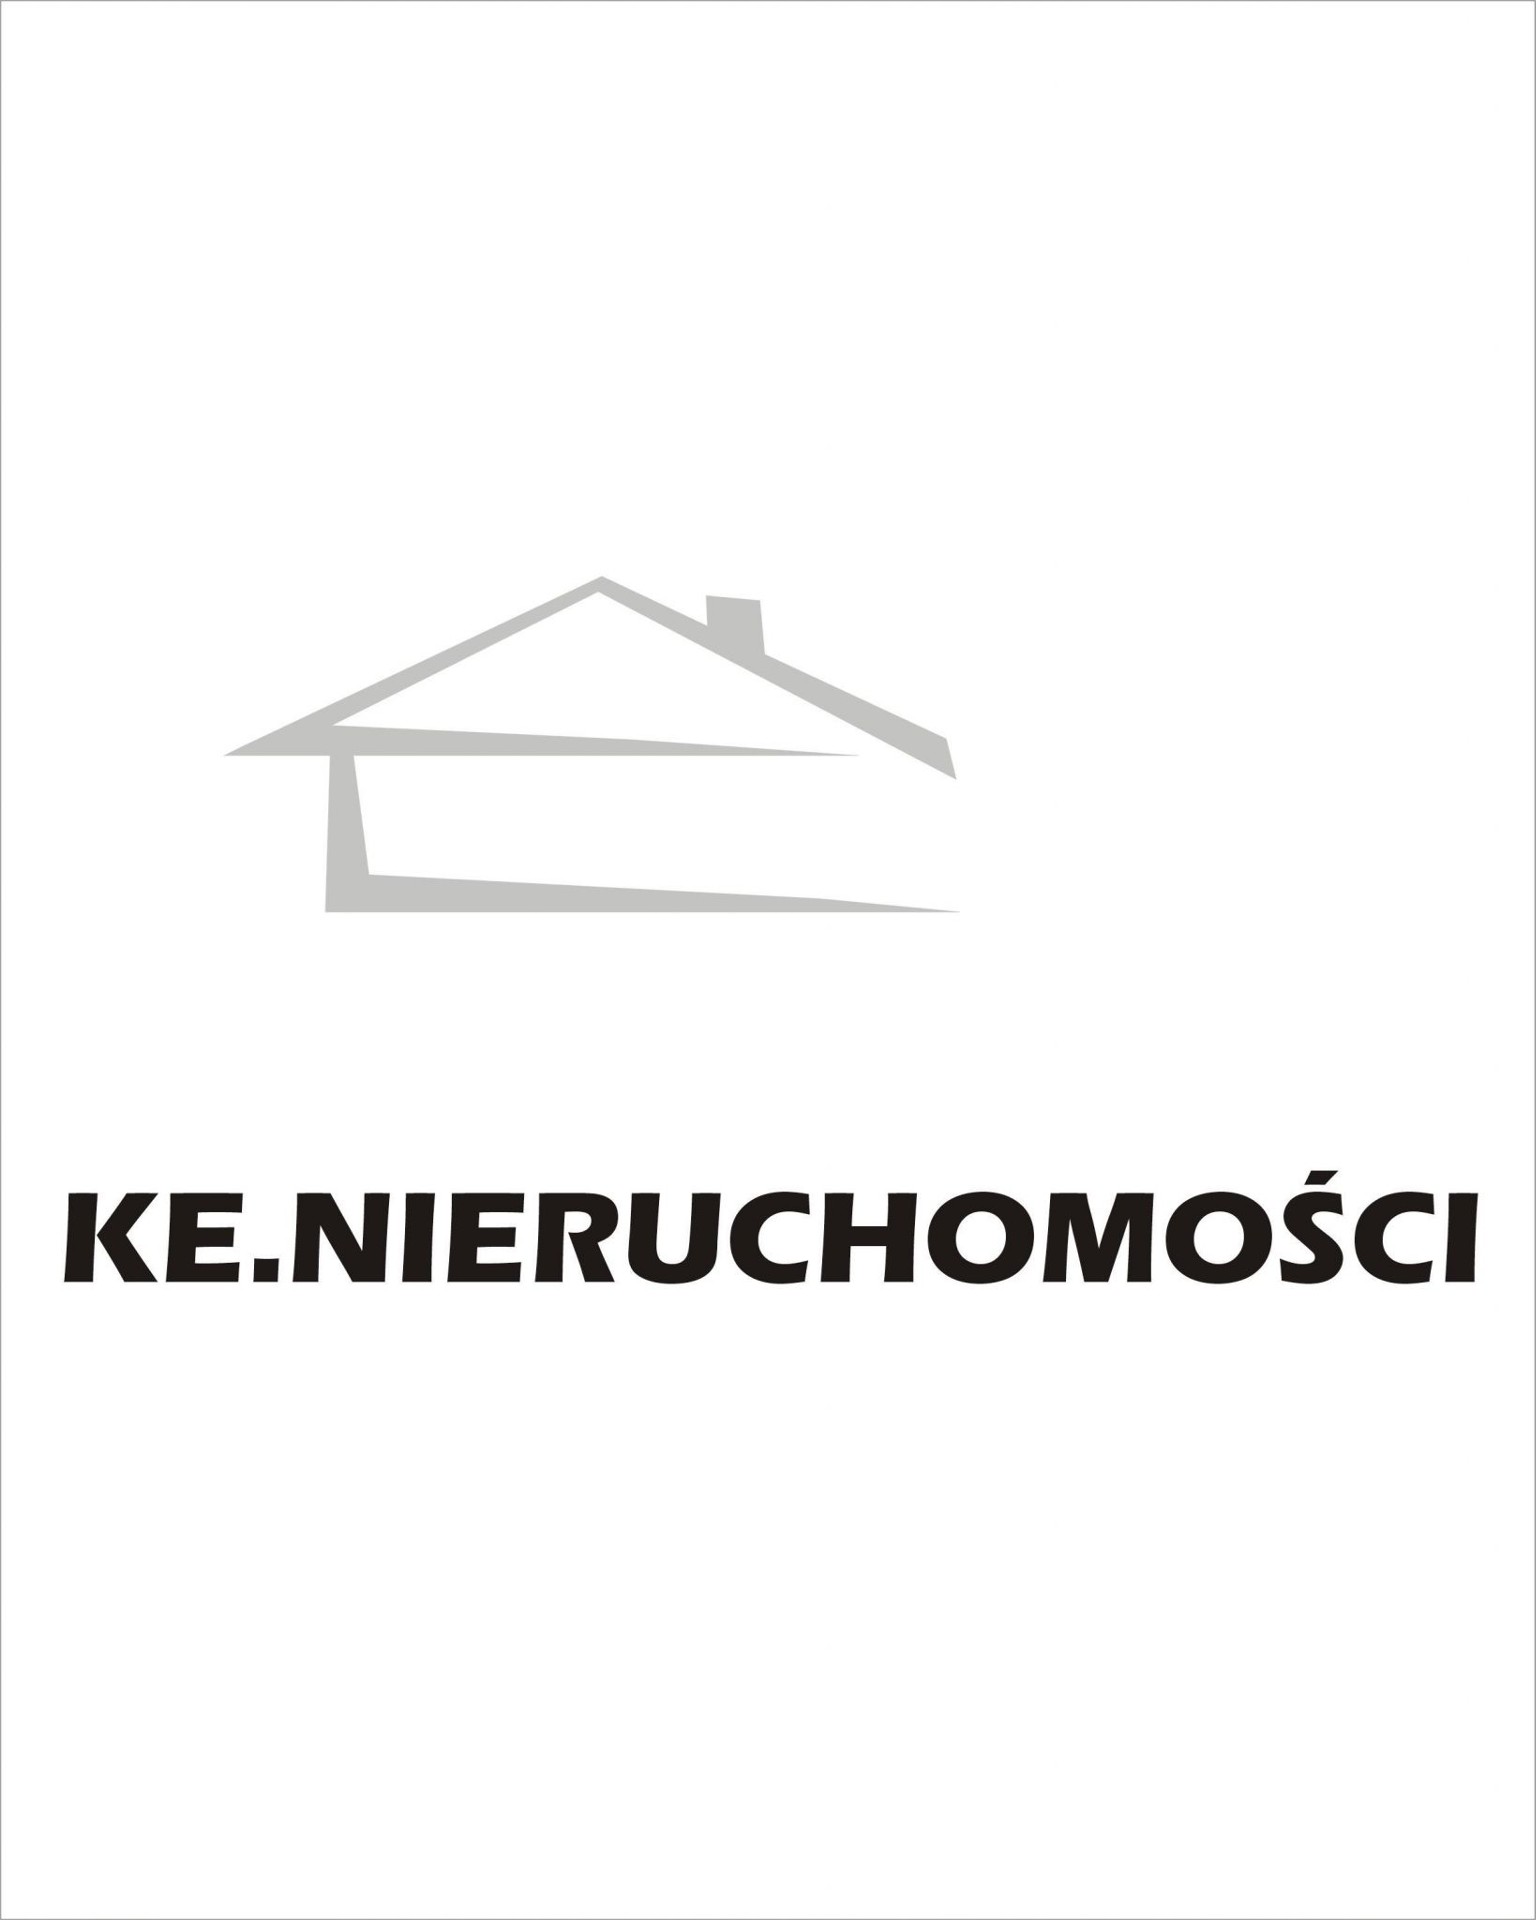 Logo KE.NIERUCHOMOŚCI